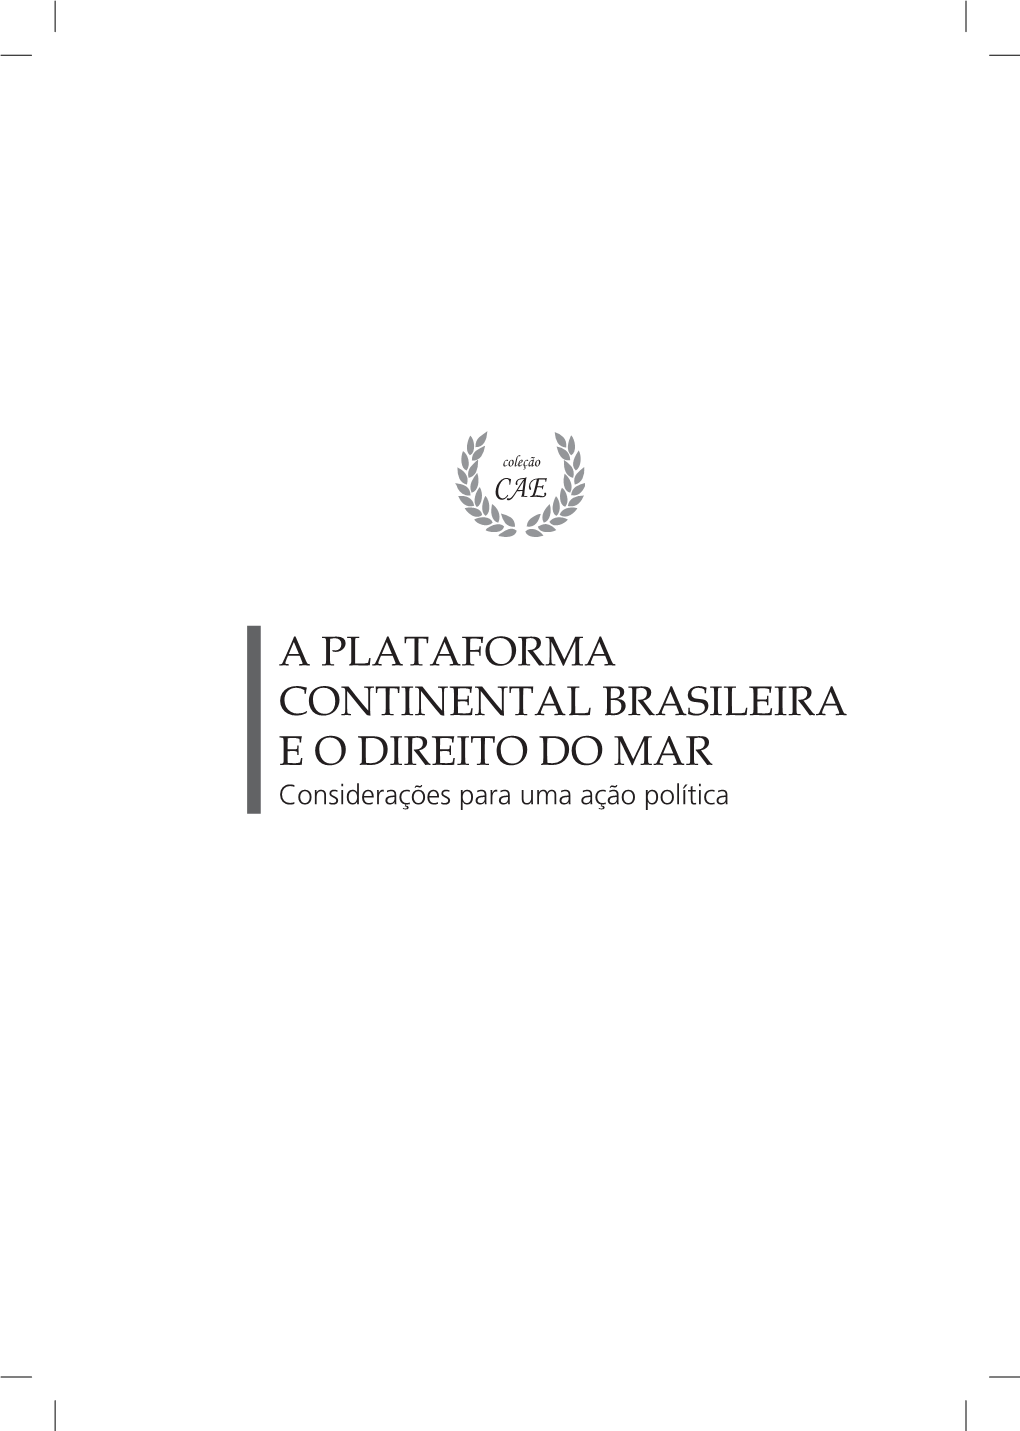 A Plataforma Continental Brasileira E O Direito Do Mar 28 07 2015.Indd